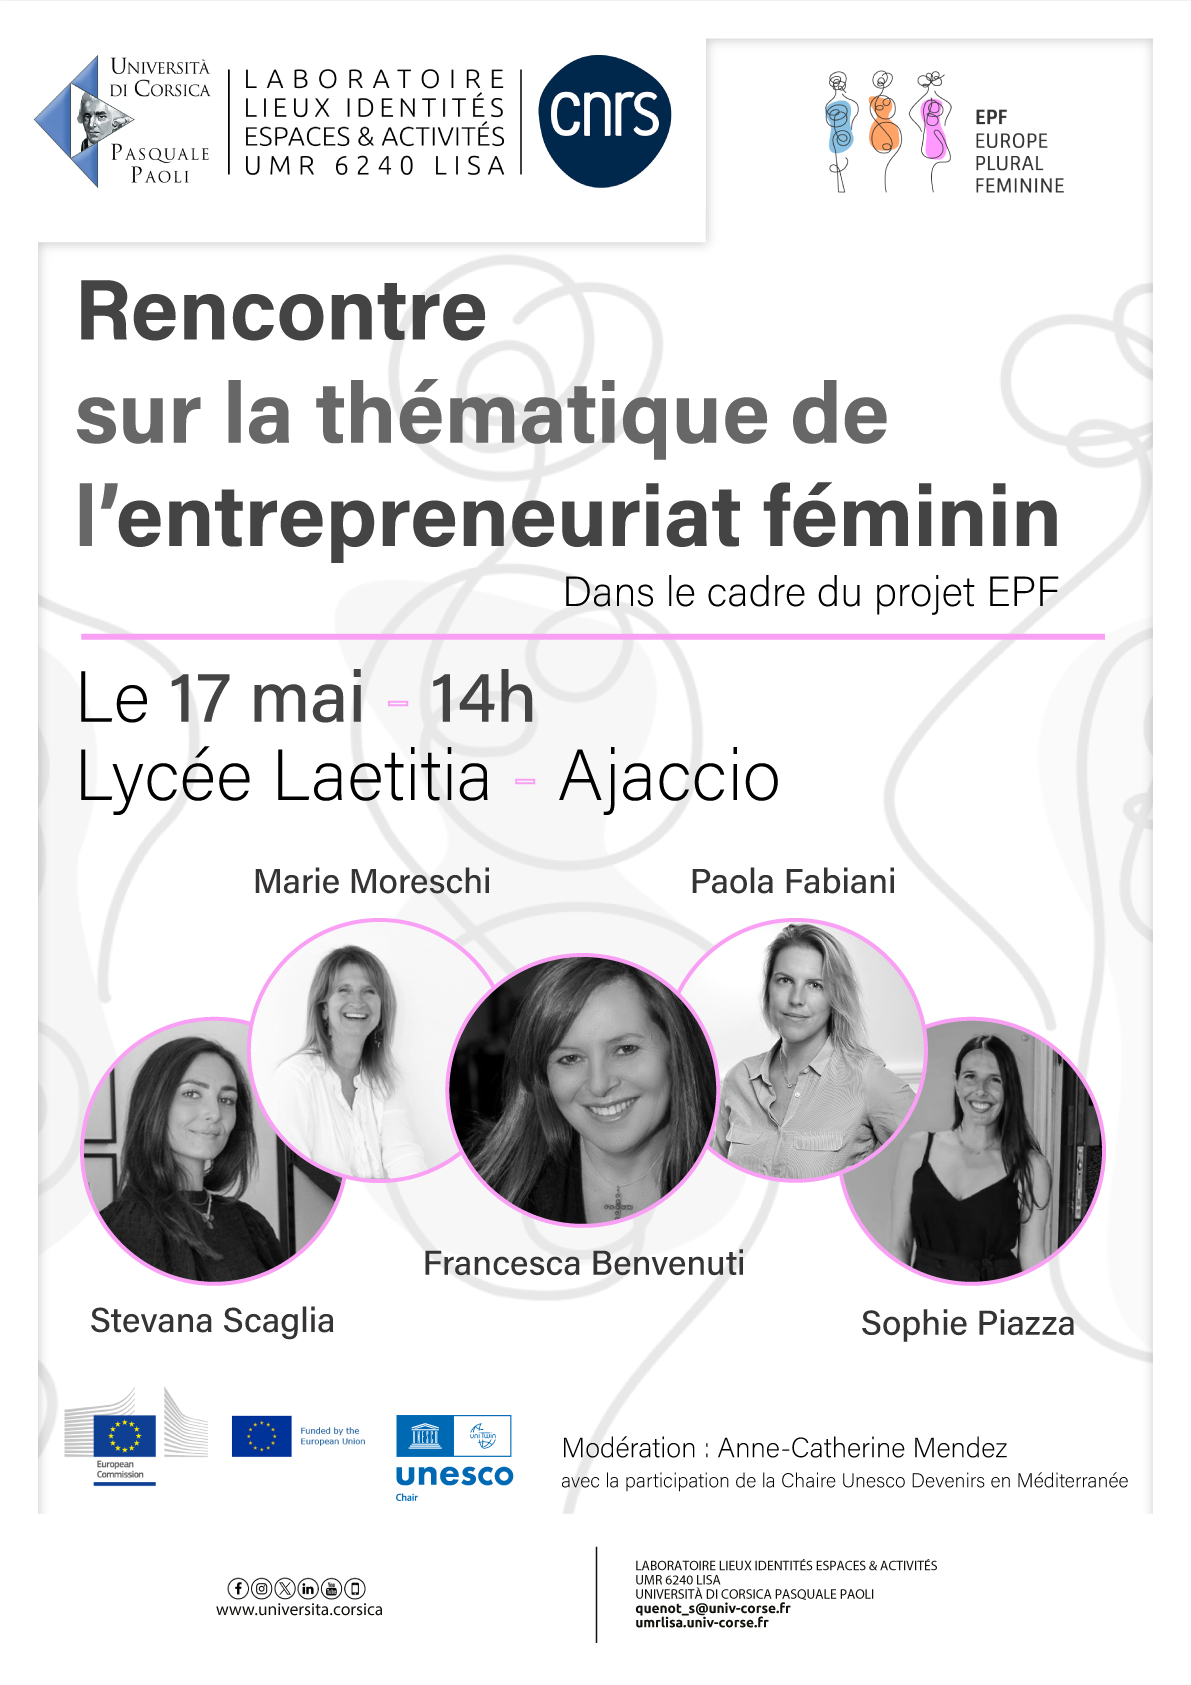 EUROPE PLURALE FEMININE – l’entrepreneuriat féminin